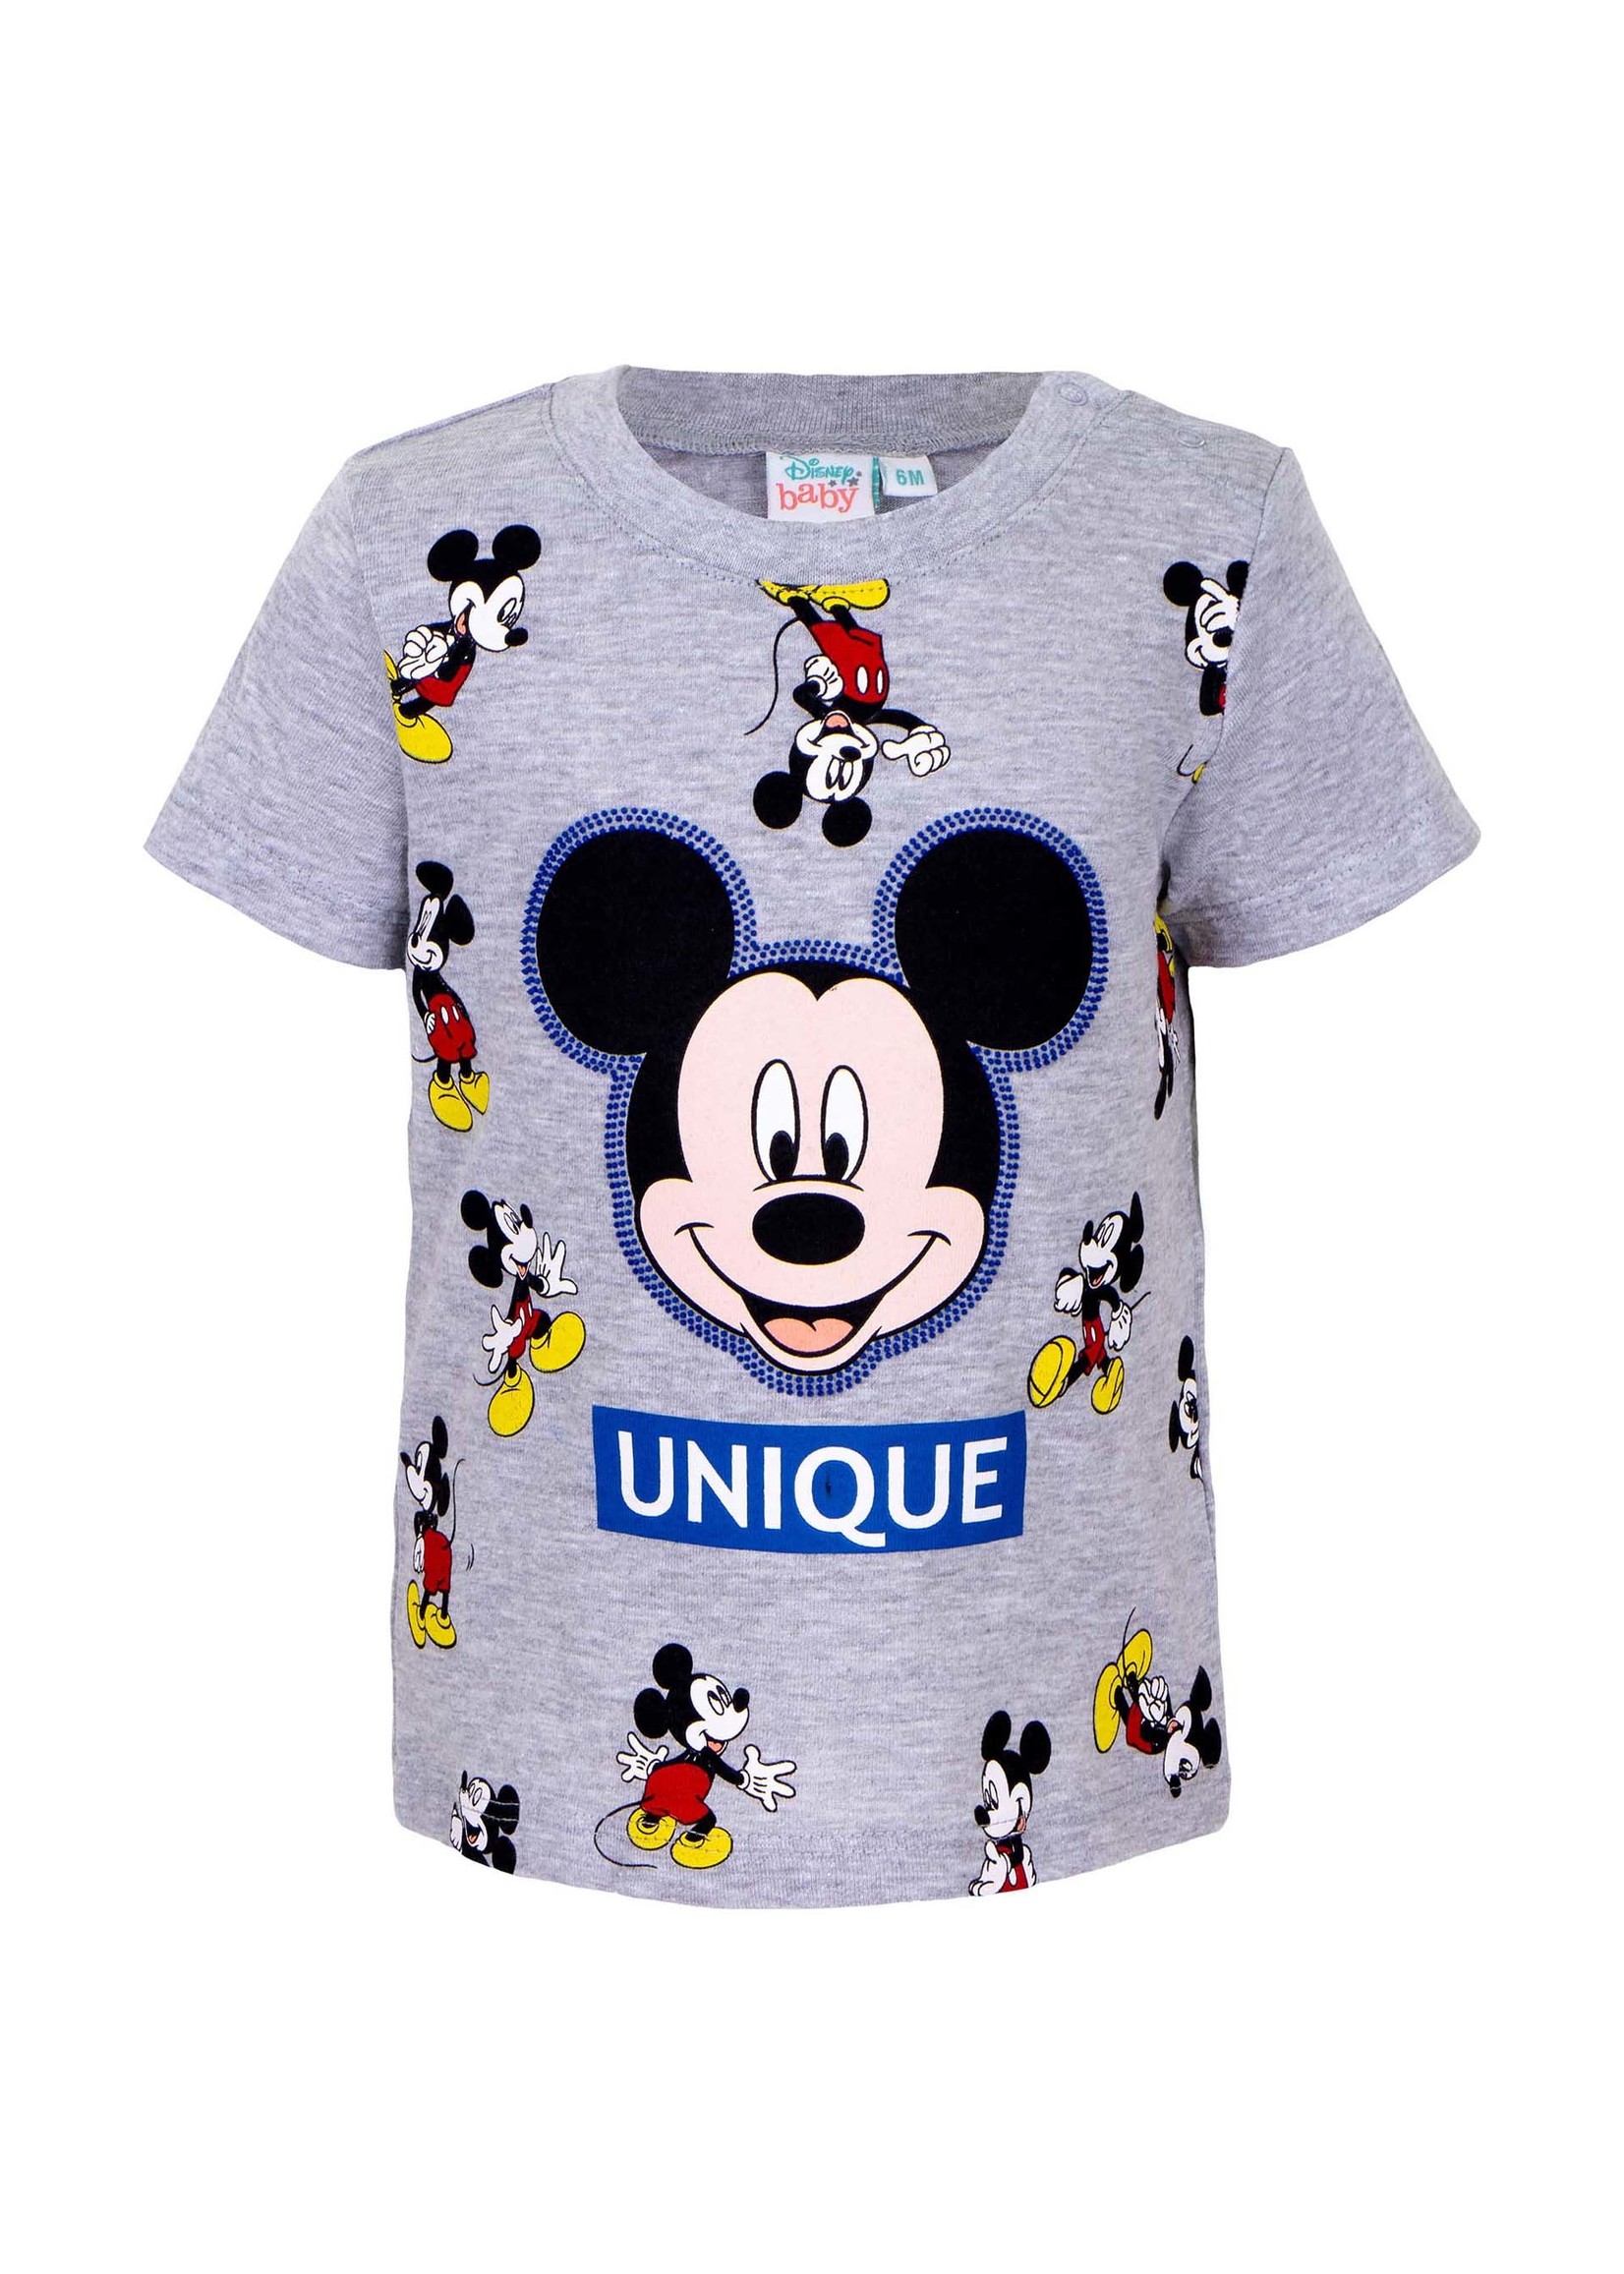 Disney baby Mickey Mouse T-shirt van Disney baby grijs